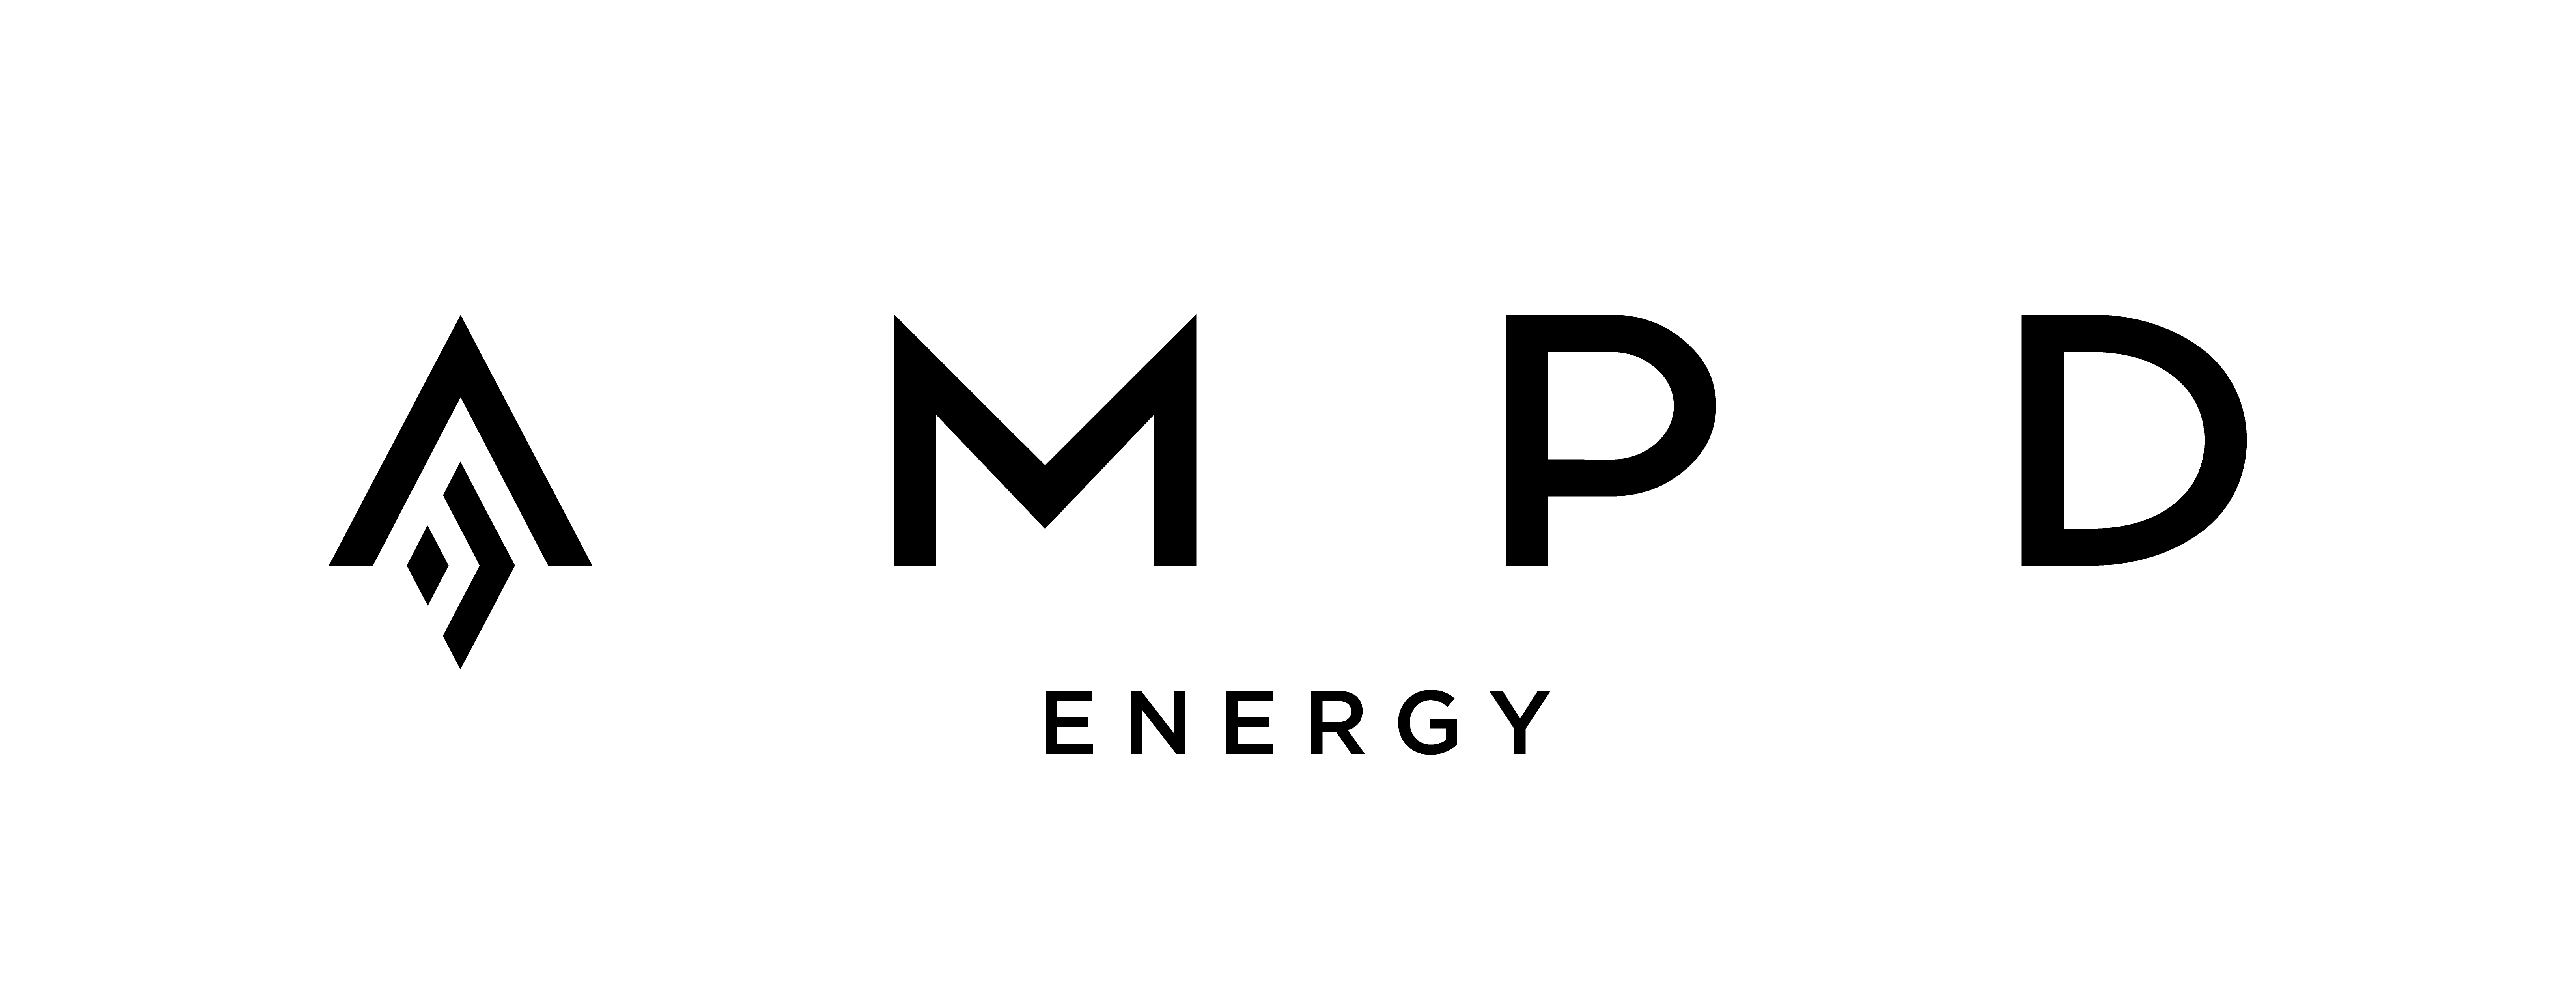 AMPD-Final_Full Logo-Black